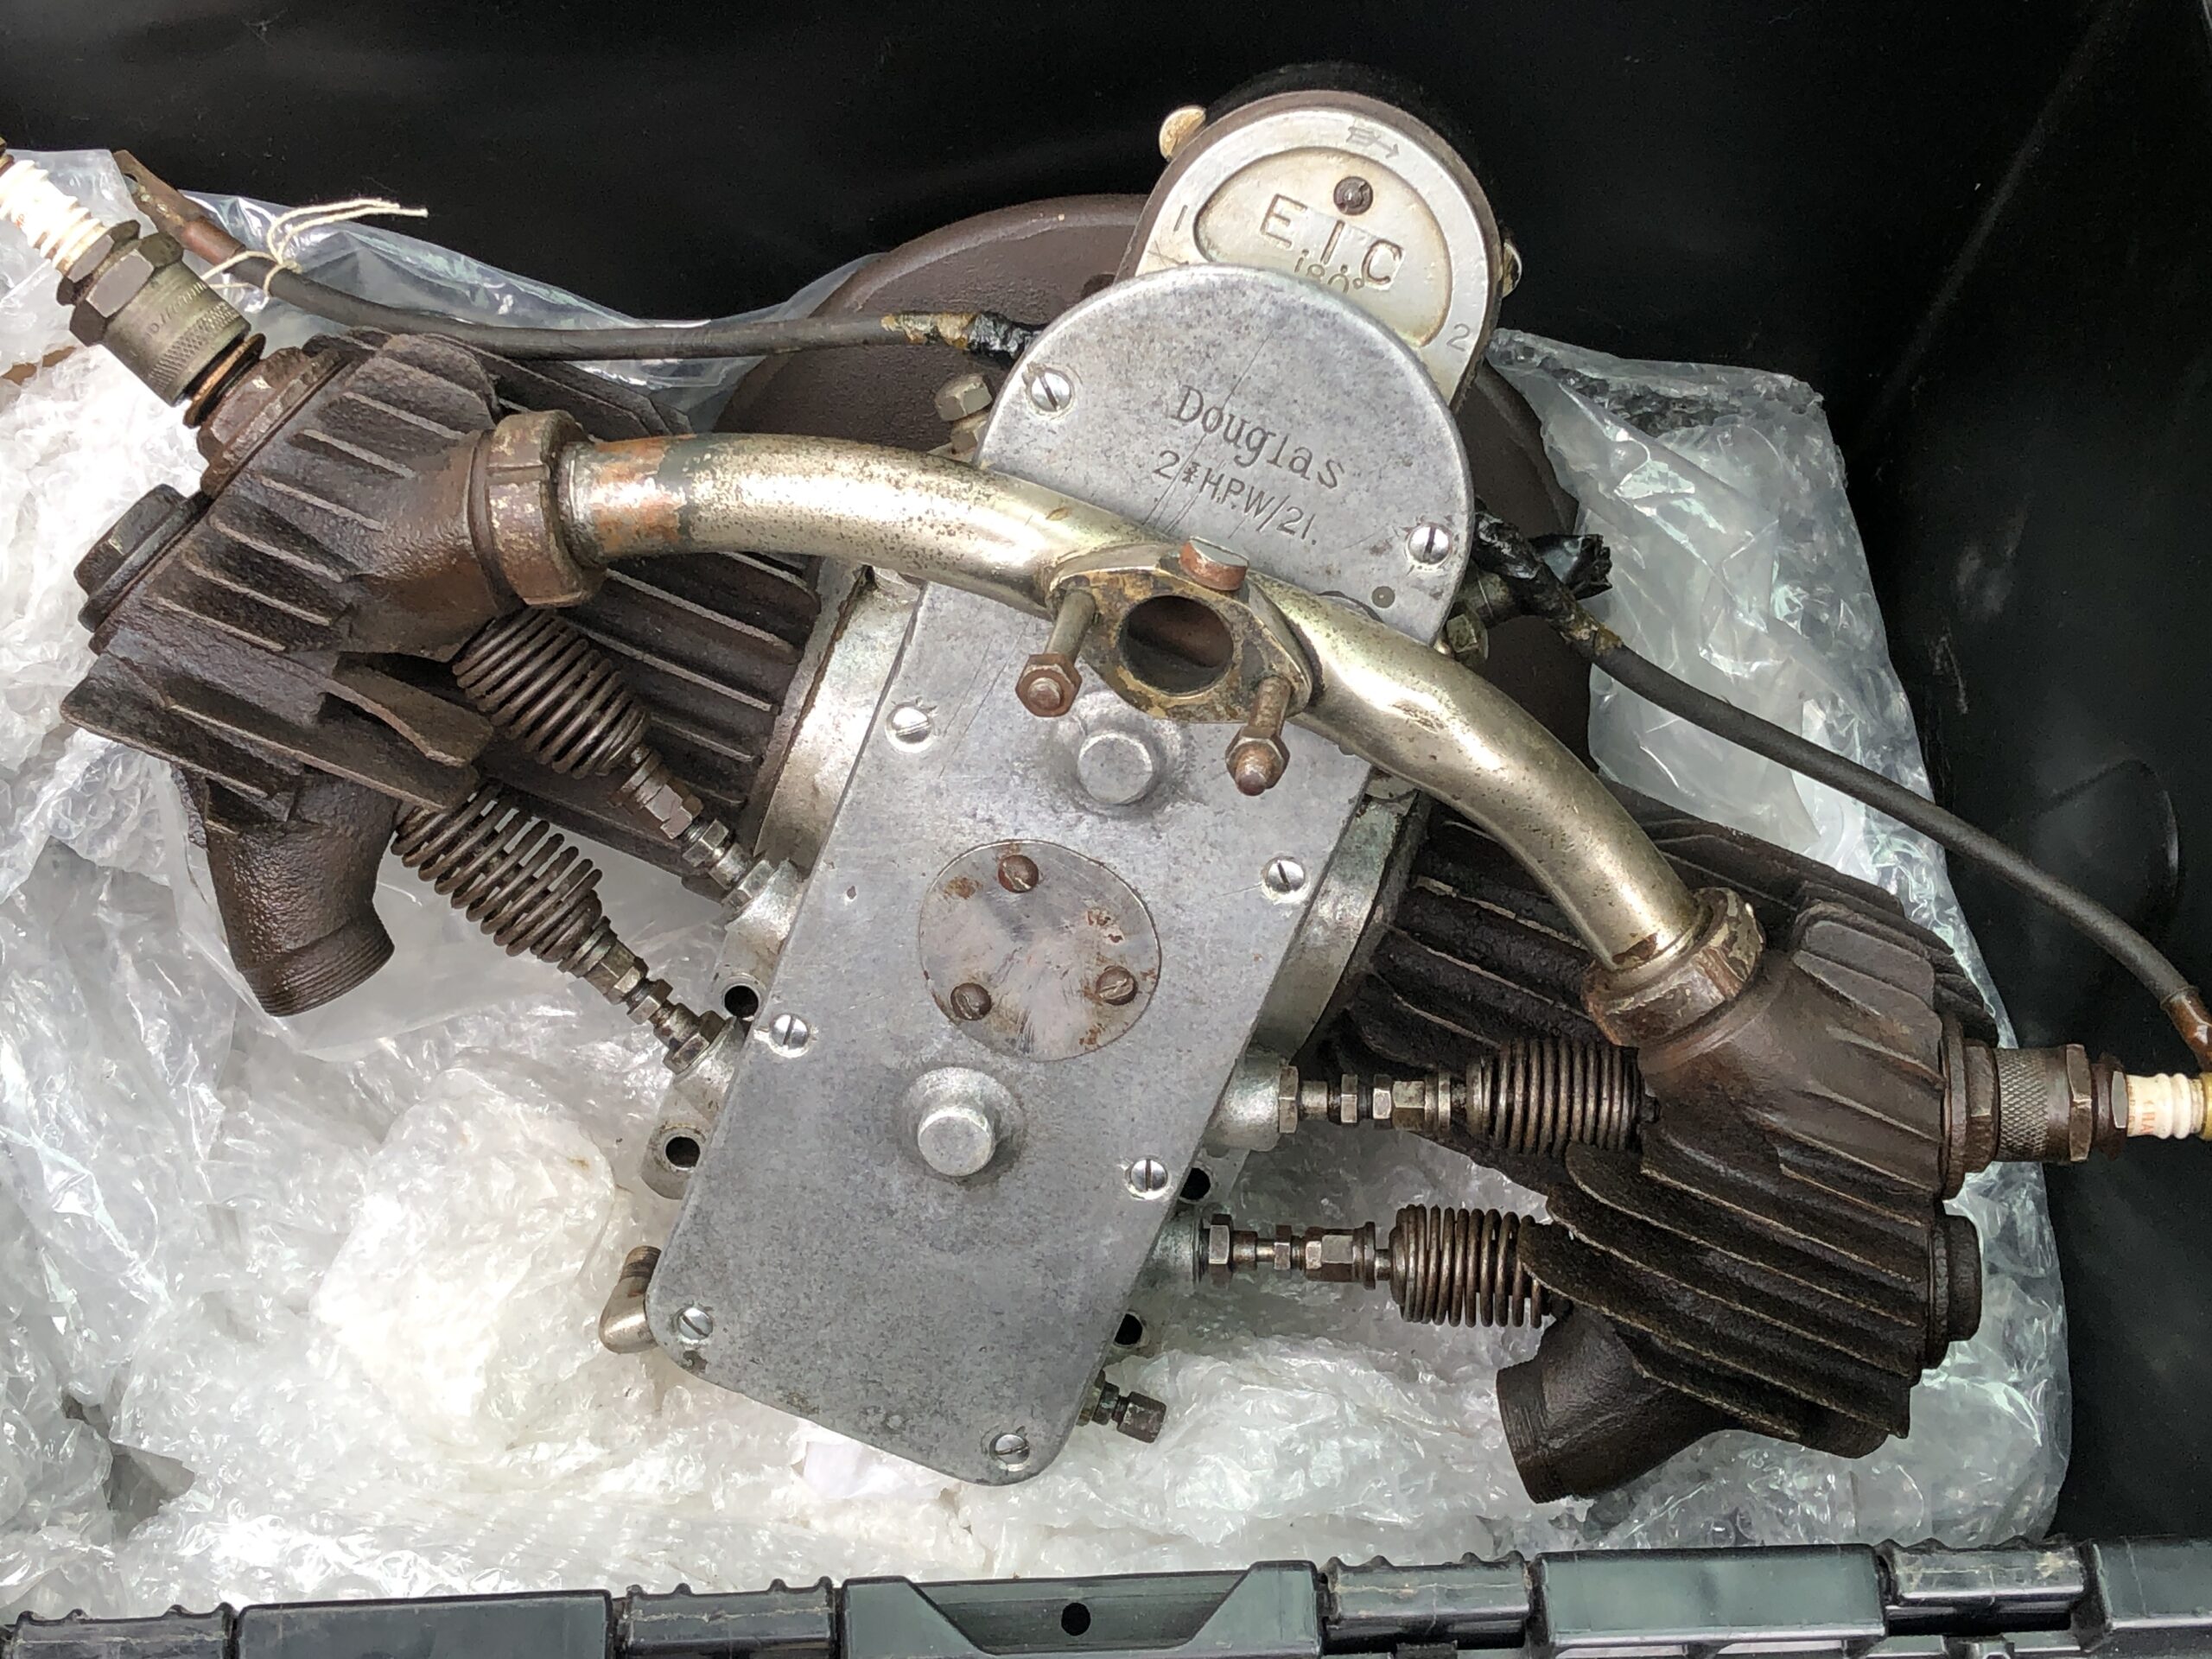 1921 Douglas W/21 Vintage motorcycle 2-3/4 H.P. engine